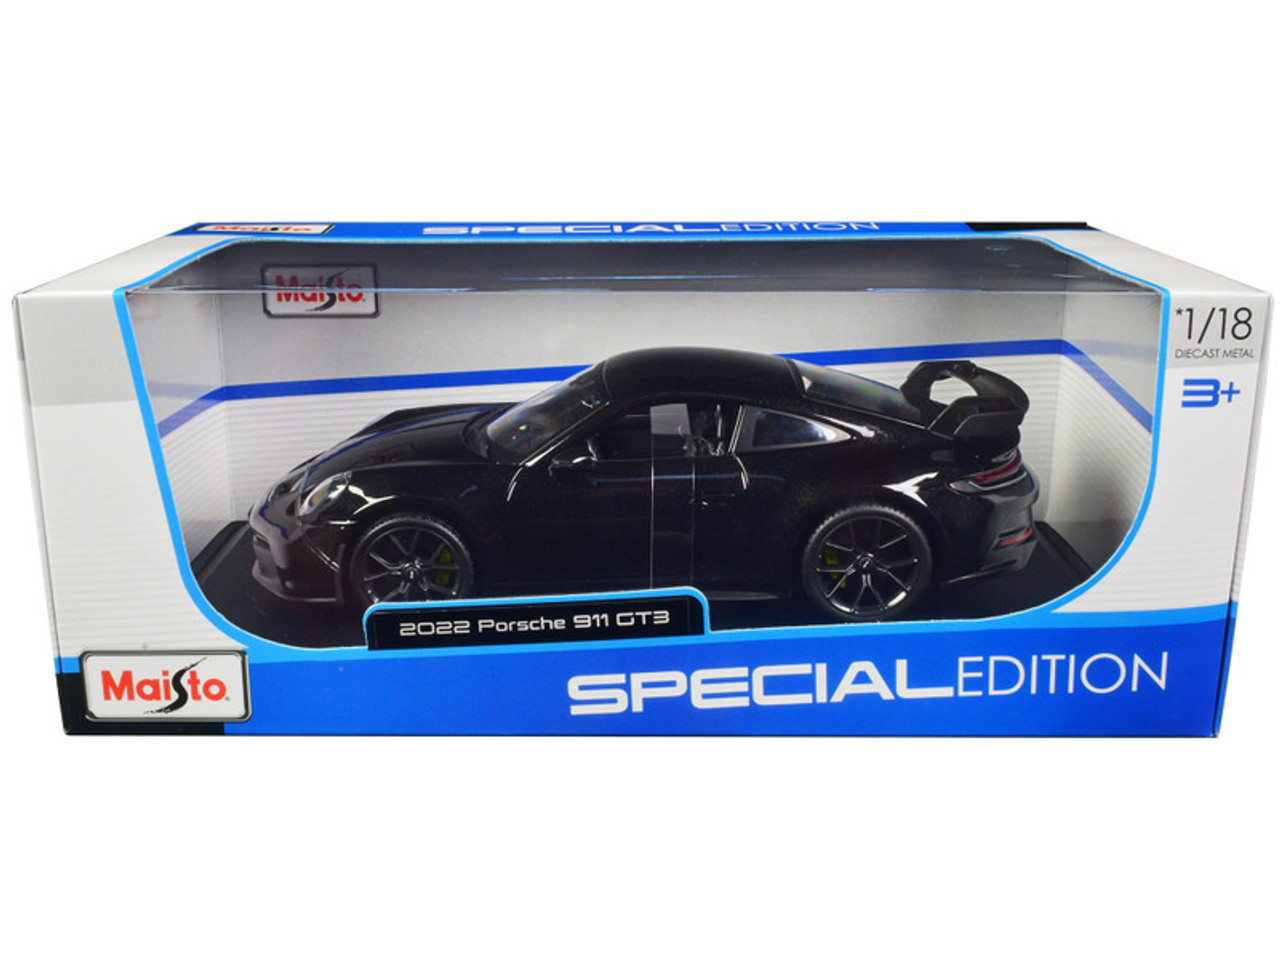 1/18 Maisto 2022 Porsche 911 GT3 (Black Metallic) "Special Edition" Diecast Car Model